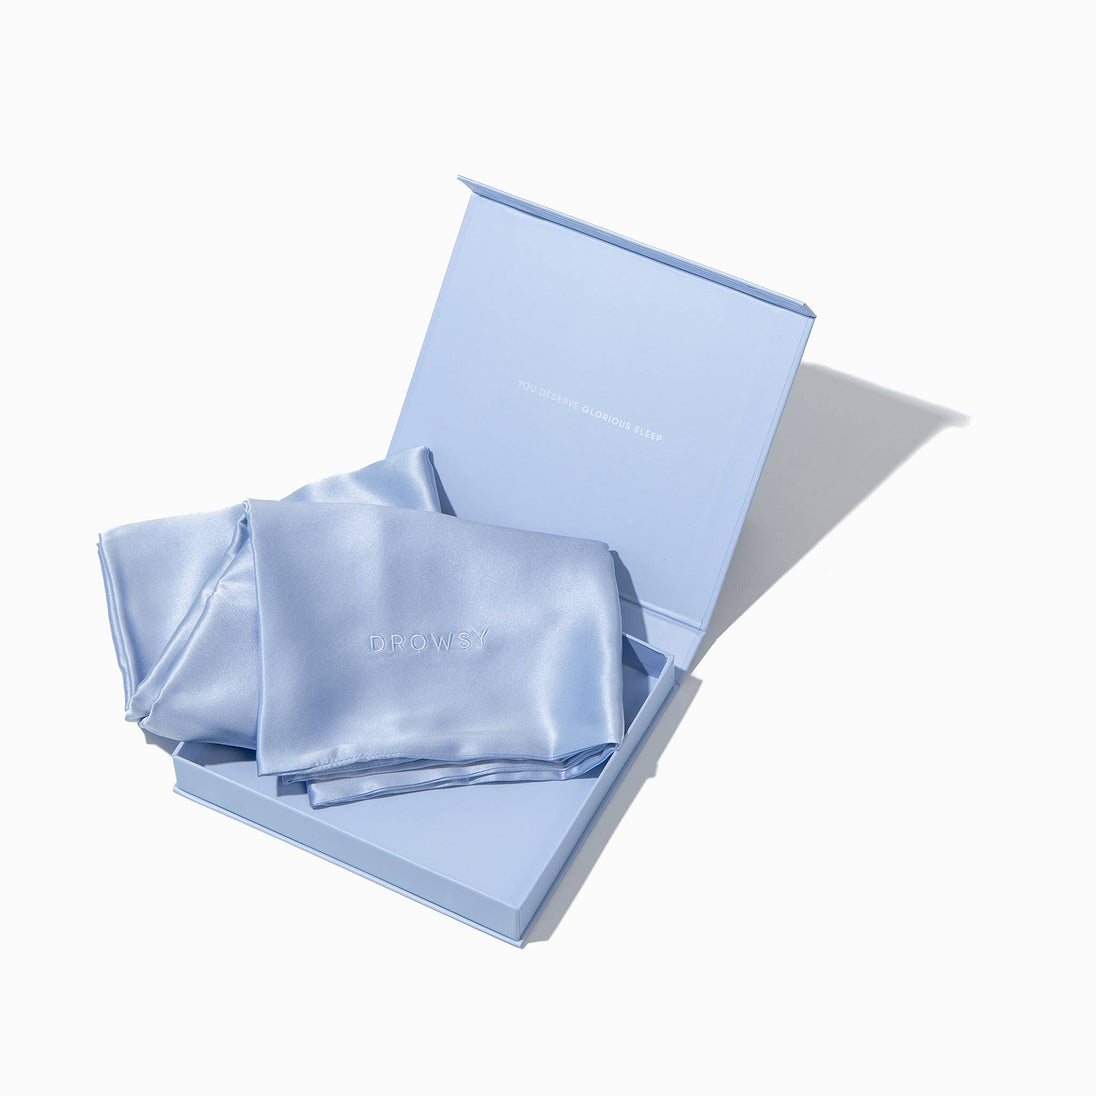 Blue pillowcase box opening with blue silk pillowcase inside